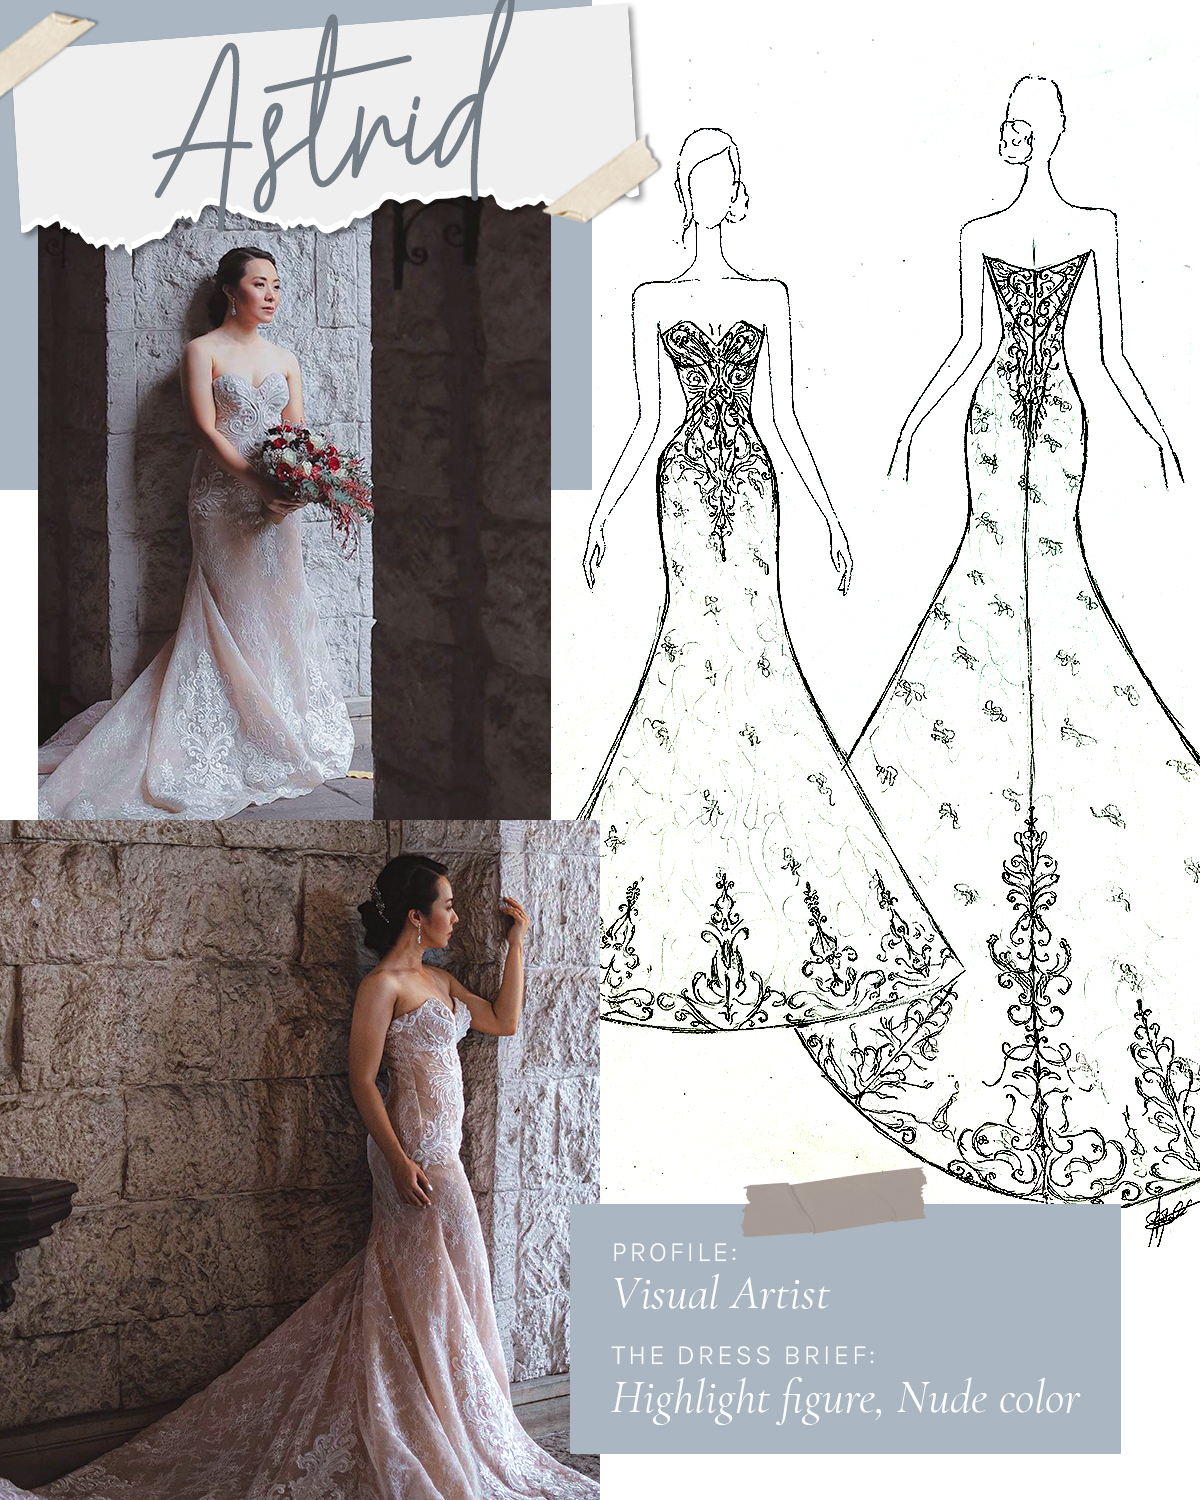 Bride: Astrid Profile: Visual Artist The Dress Brief: Highlight figure, nude color